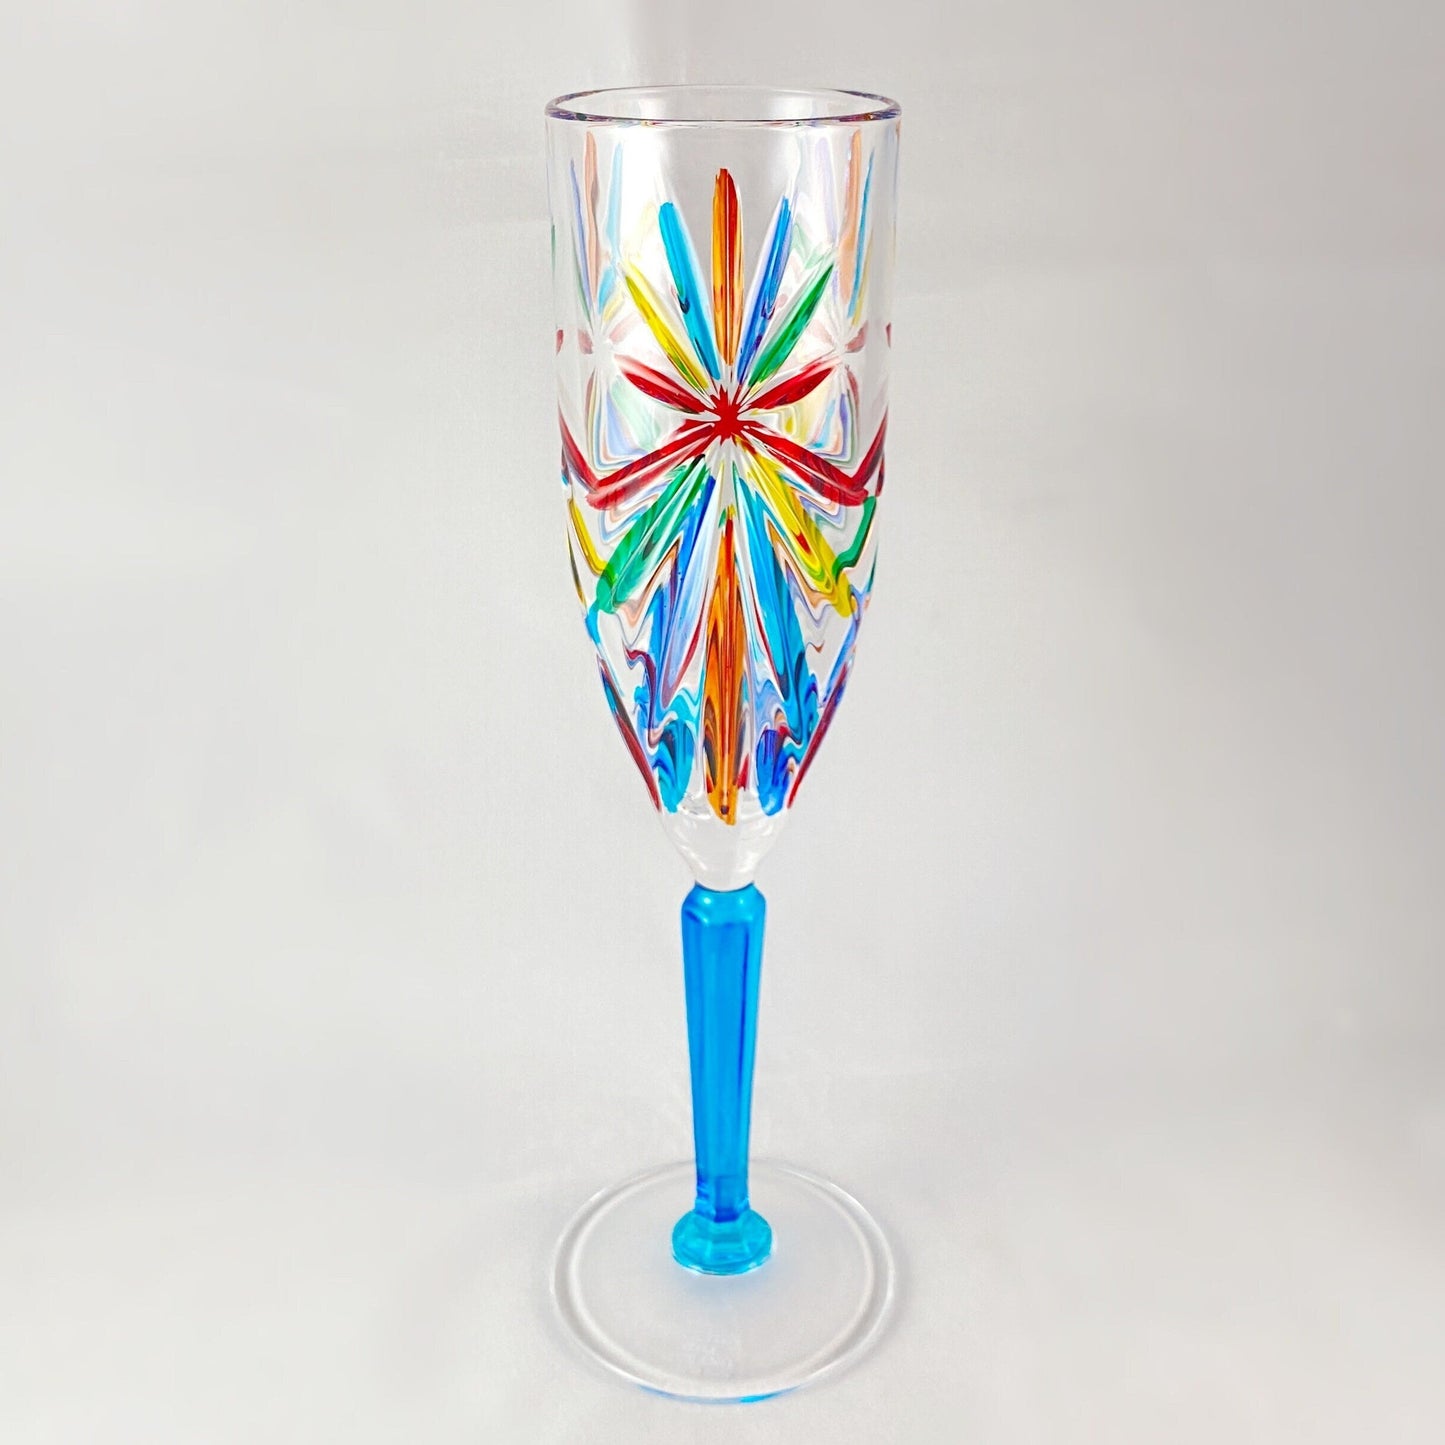 Aqua Blue Stem Oasis Venetian Glass Champagne Flute - Handmade in Italy, Colorful Murano Glass